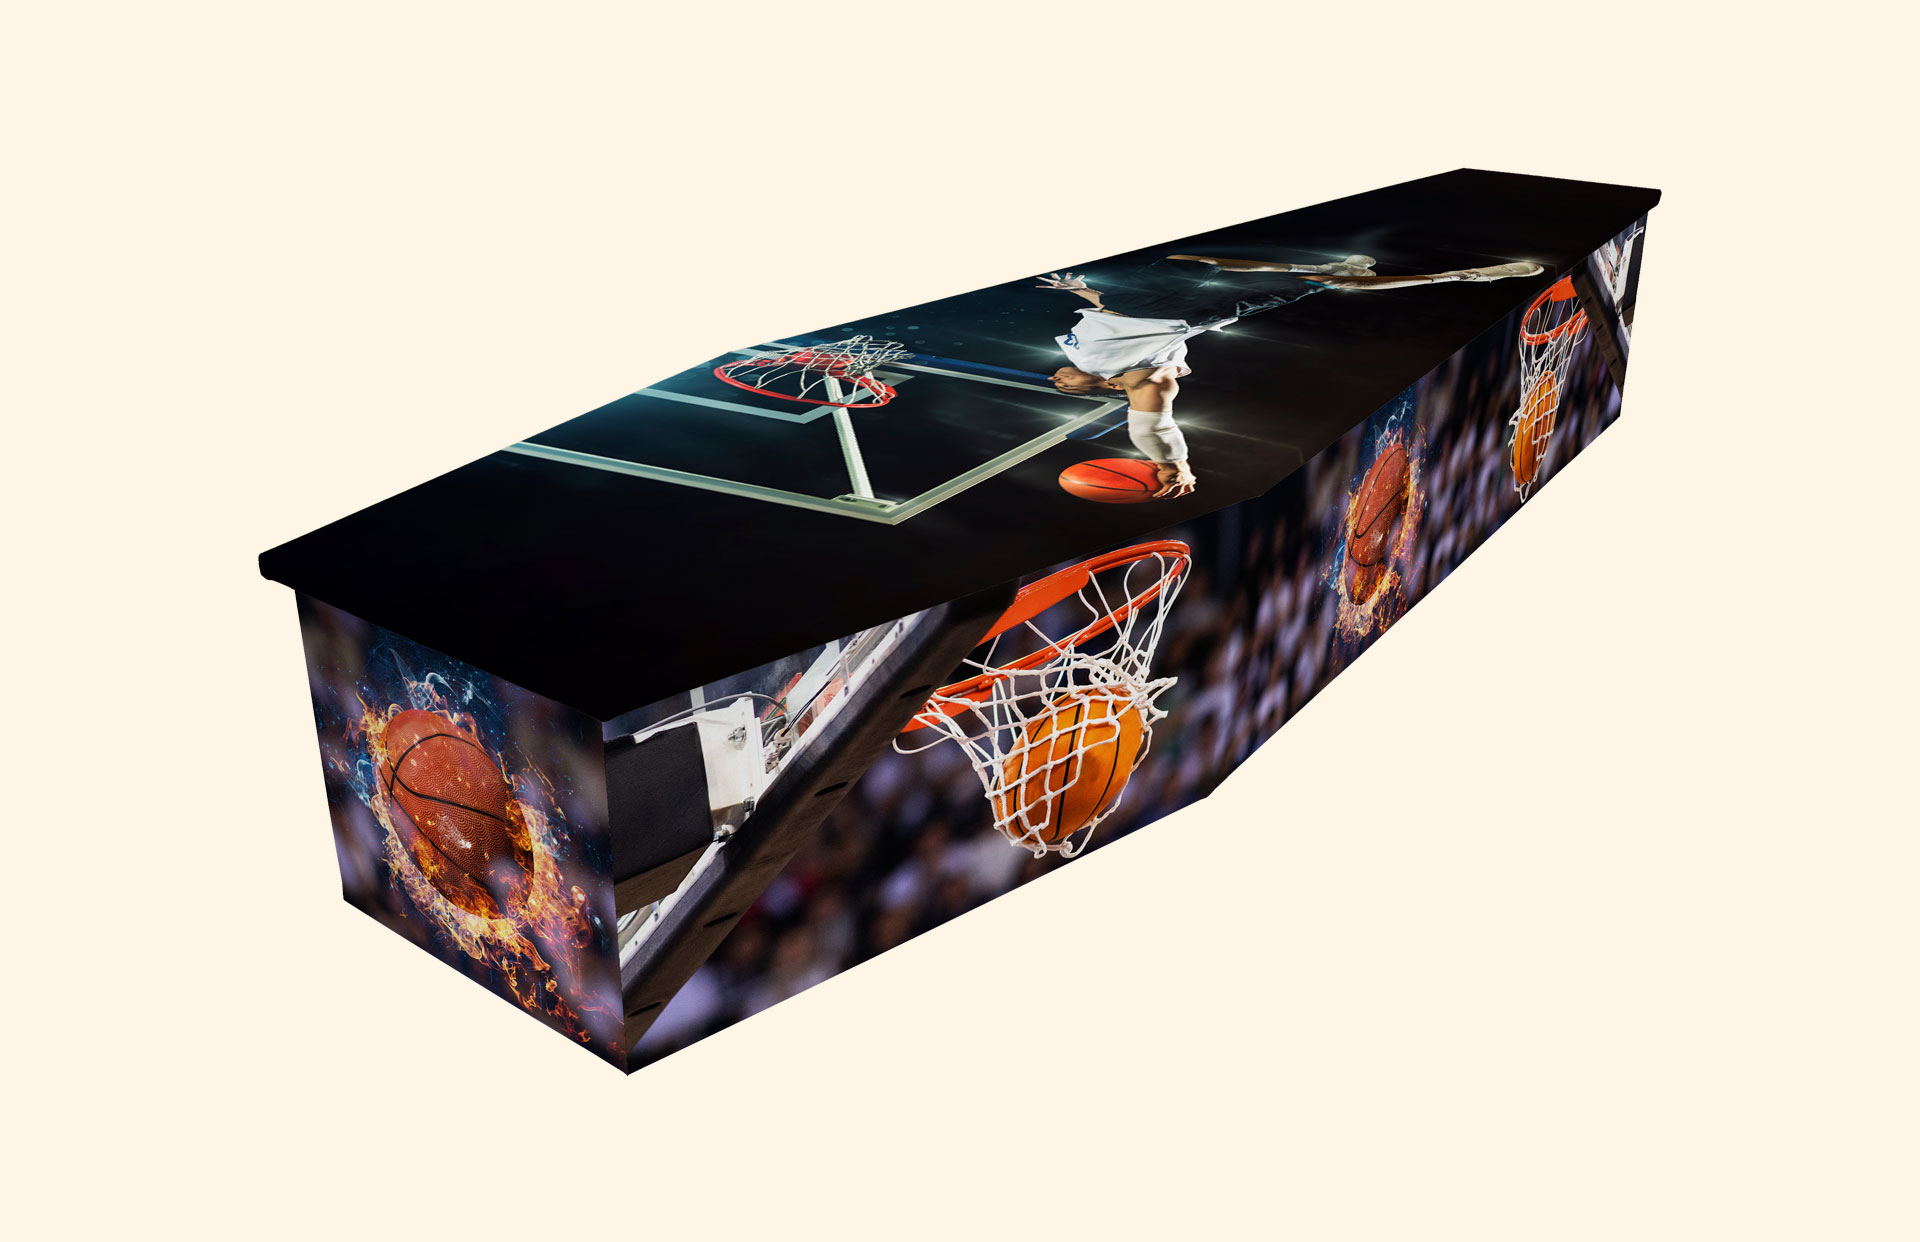 Slam Dunk design on a cardboard coffin